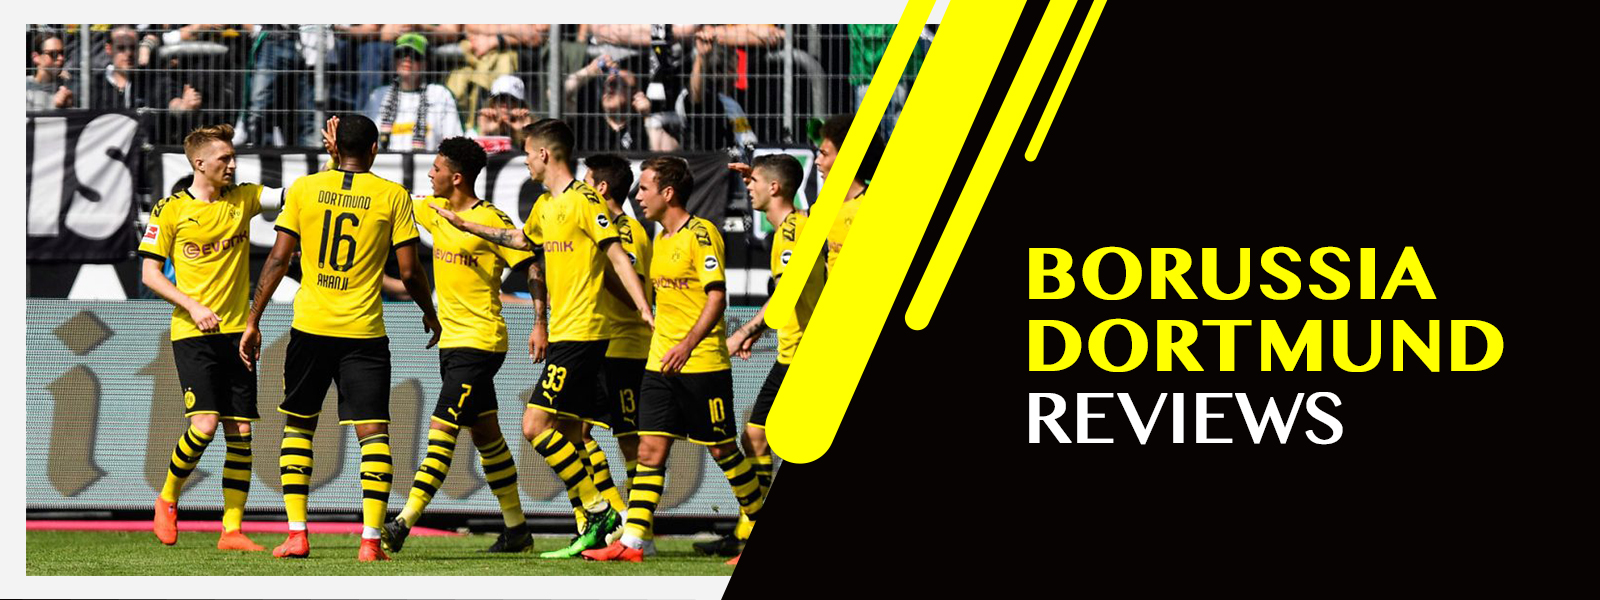 SoccerTipsters Blog | Borussia Dortmund Football Club Reviews